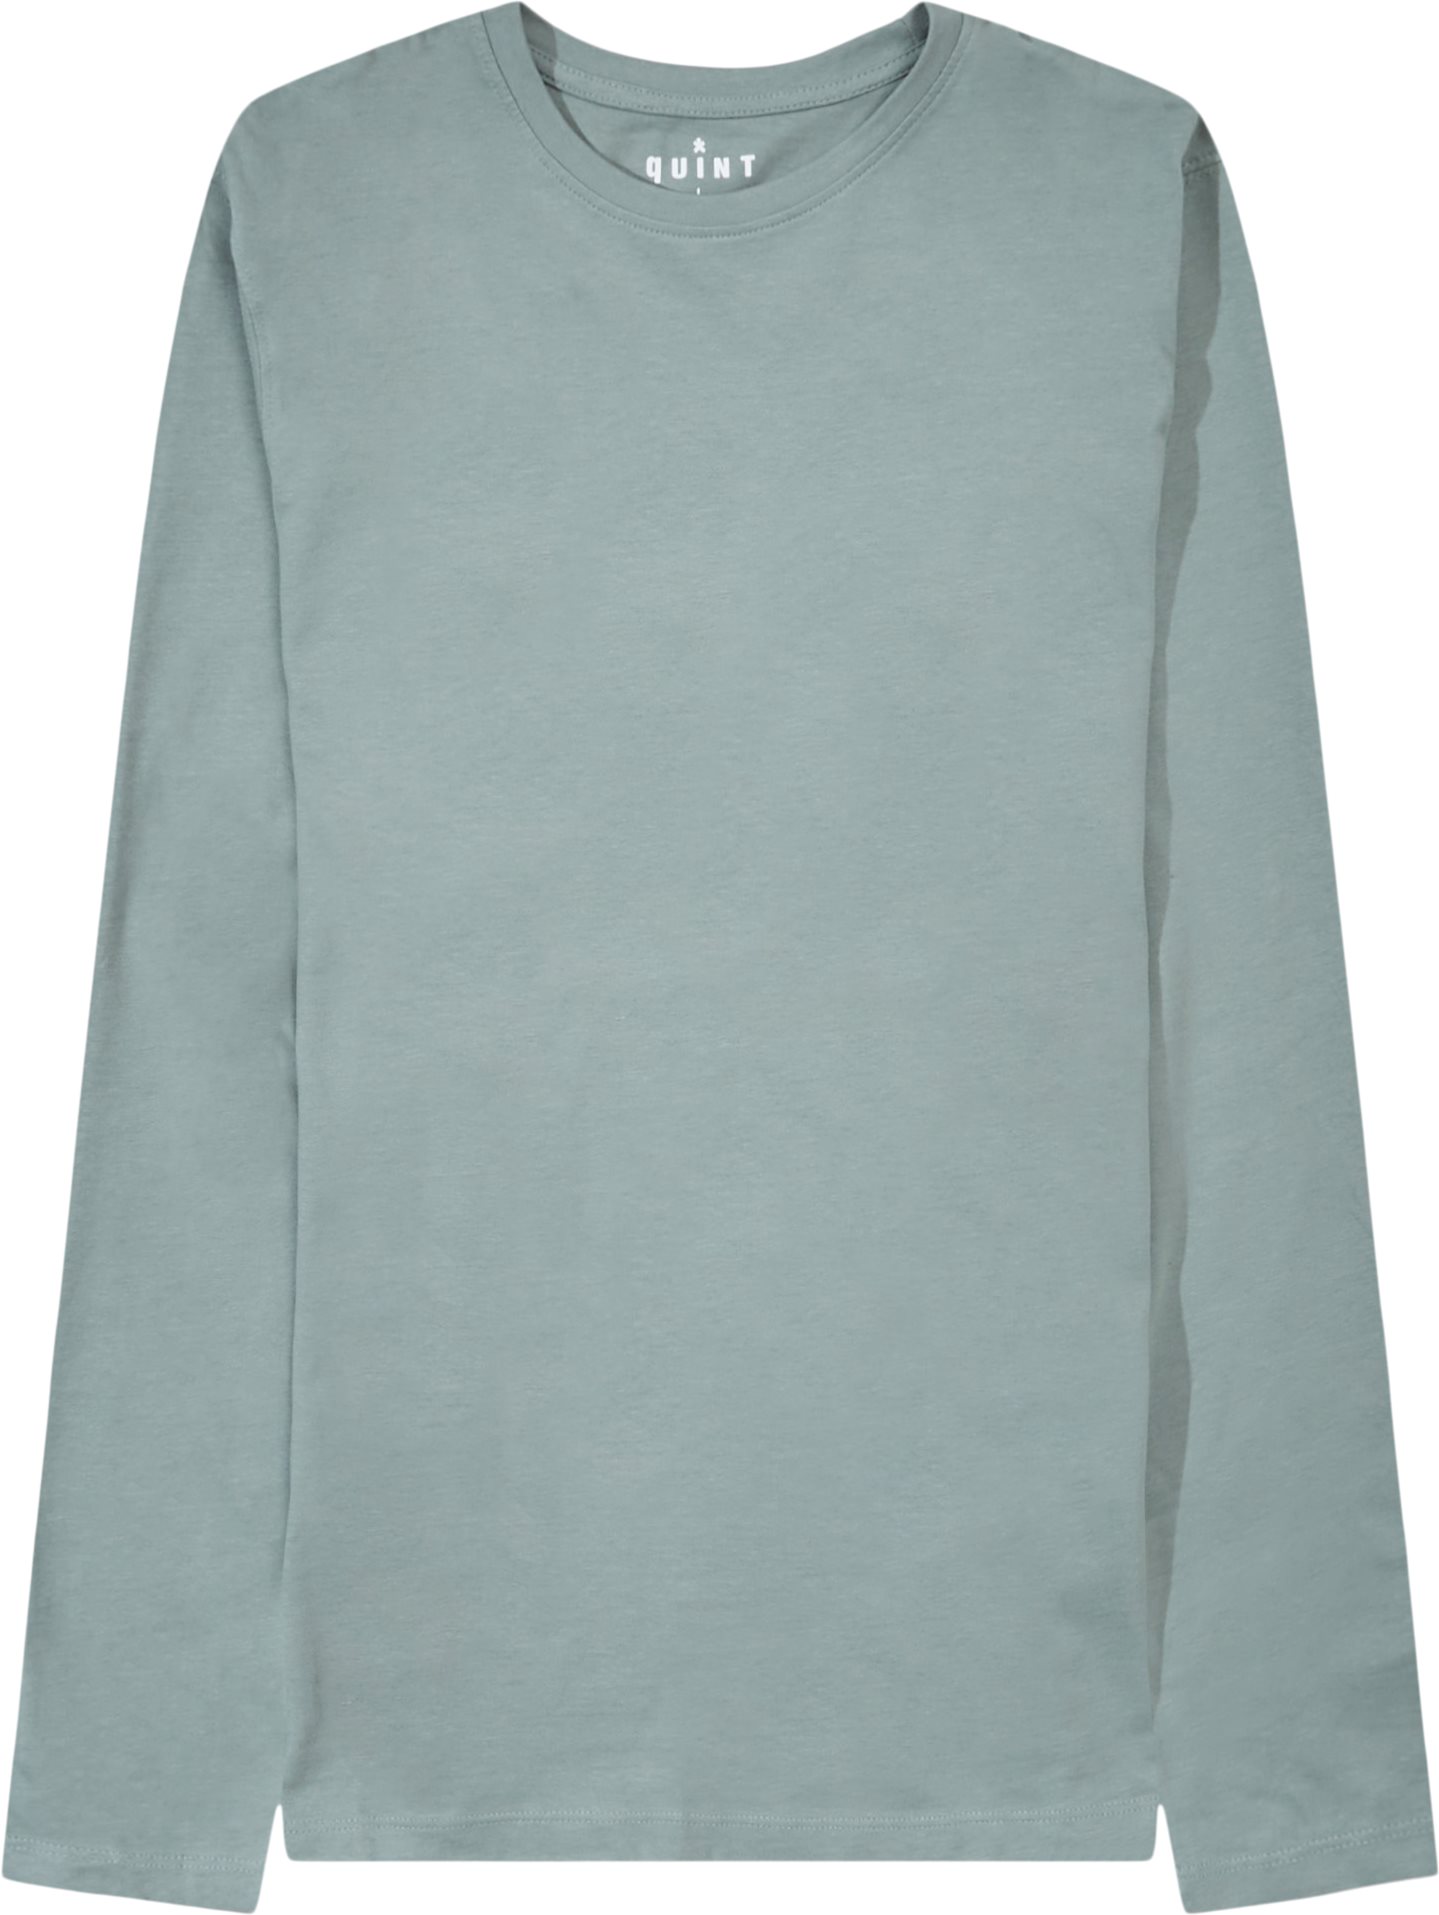 Ray Long Sleeve Tee - T-shirts - Regular fit - Blue